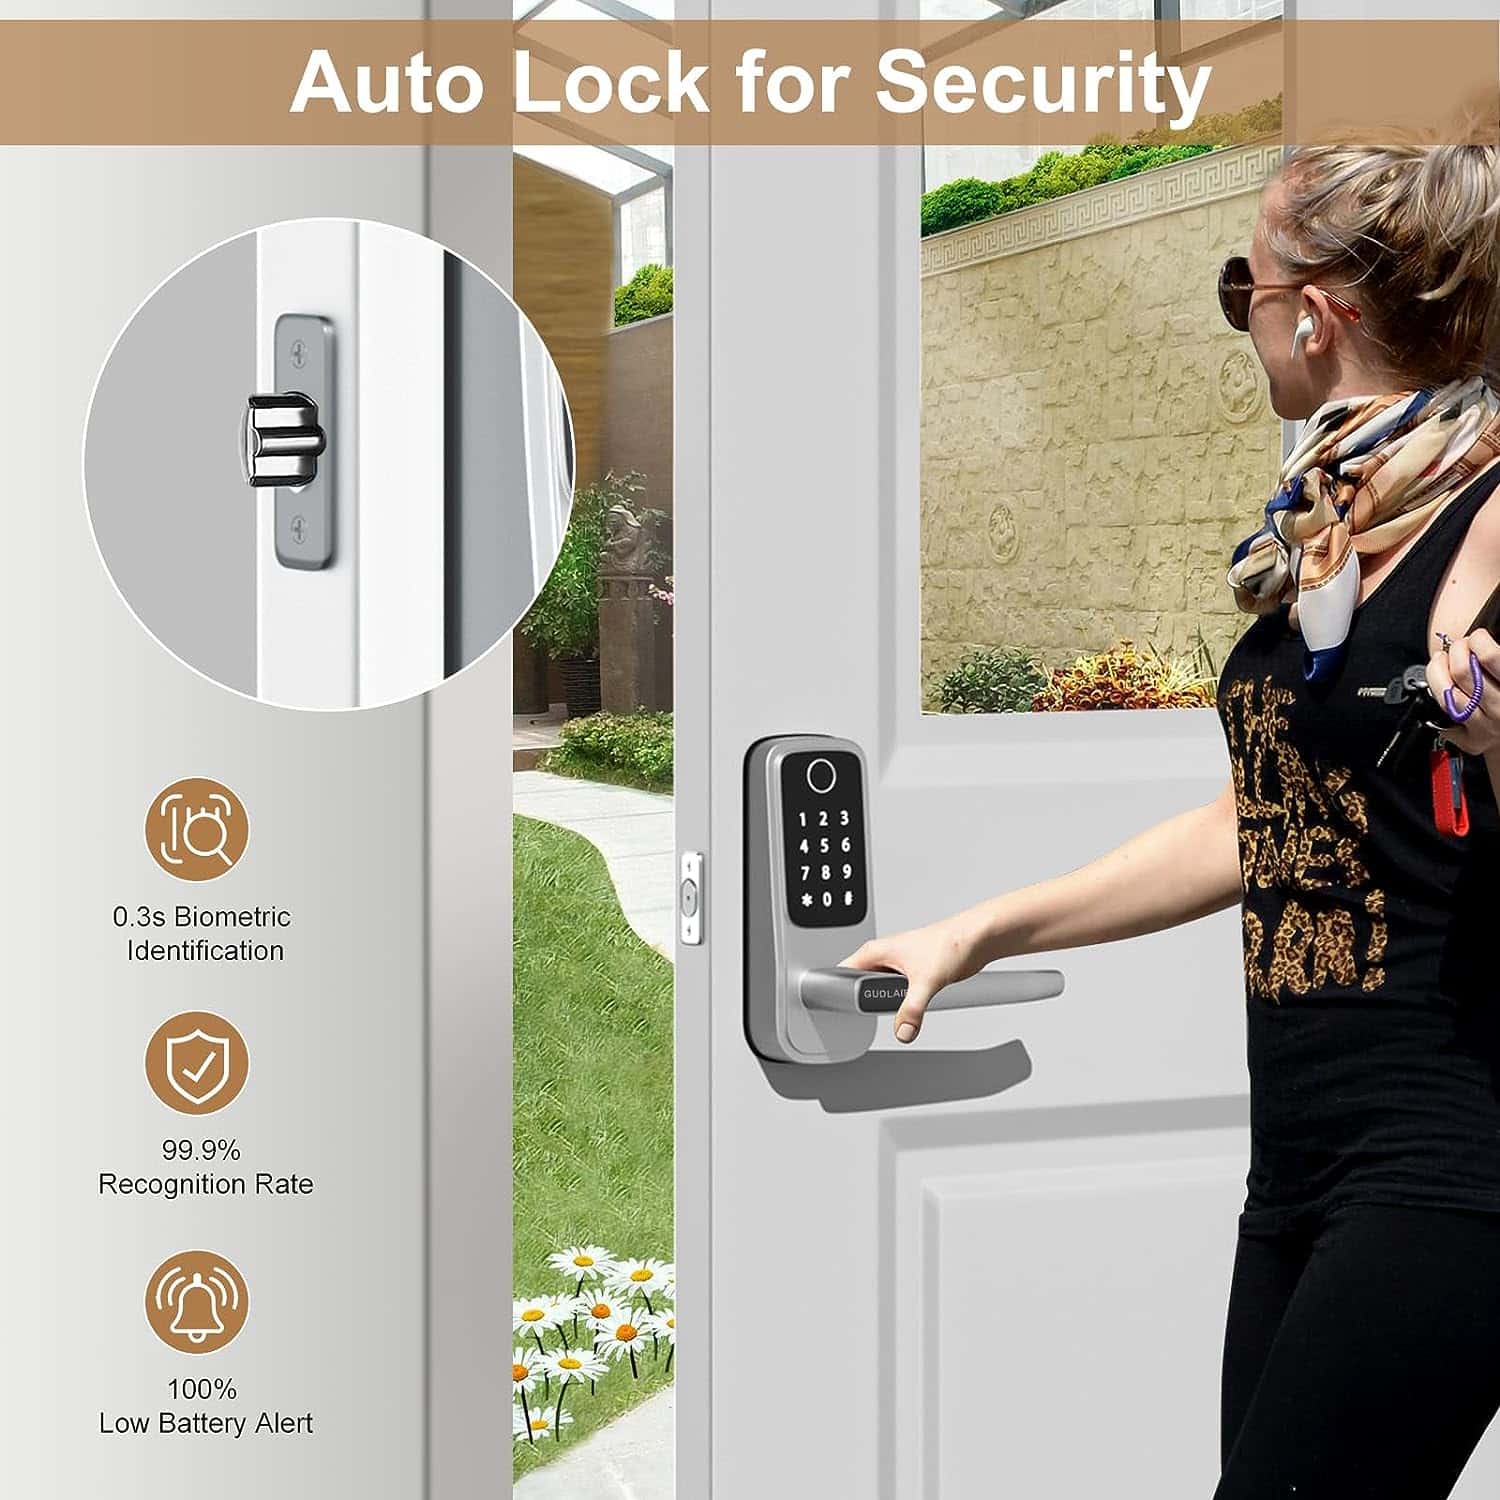 GUDLAIF Smart Lock: The Ultimate Keyless Entry Door Lock Review